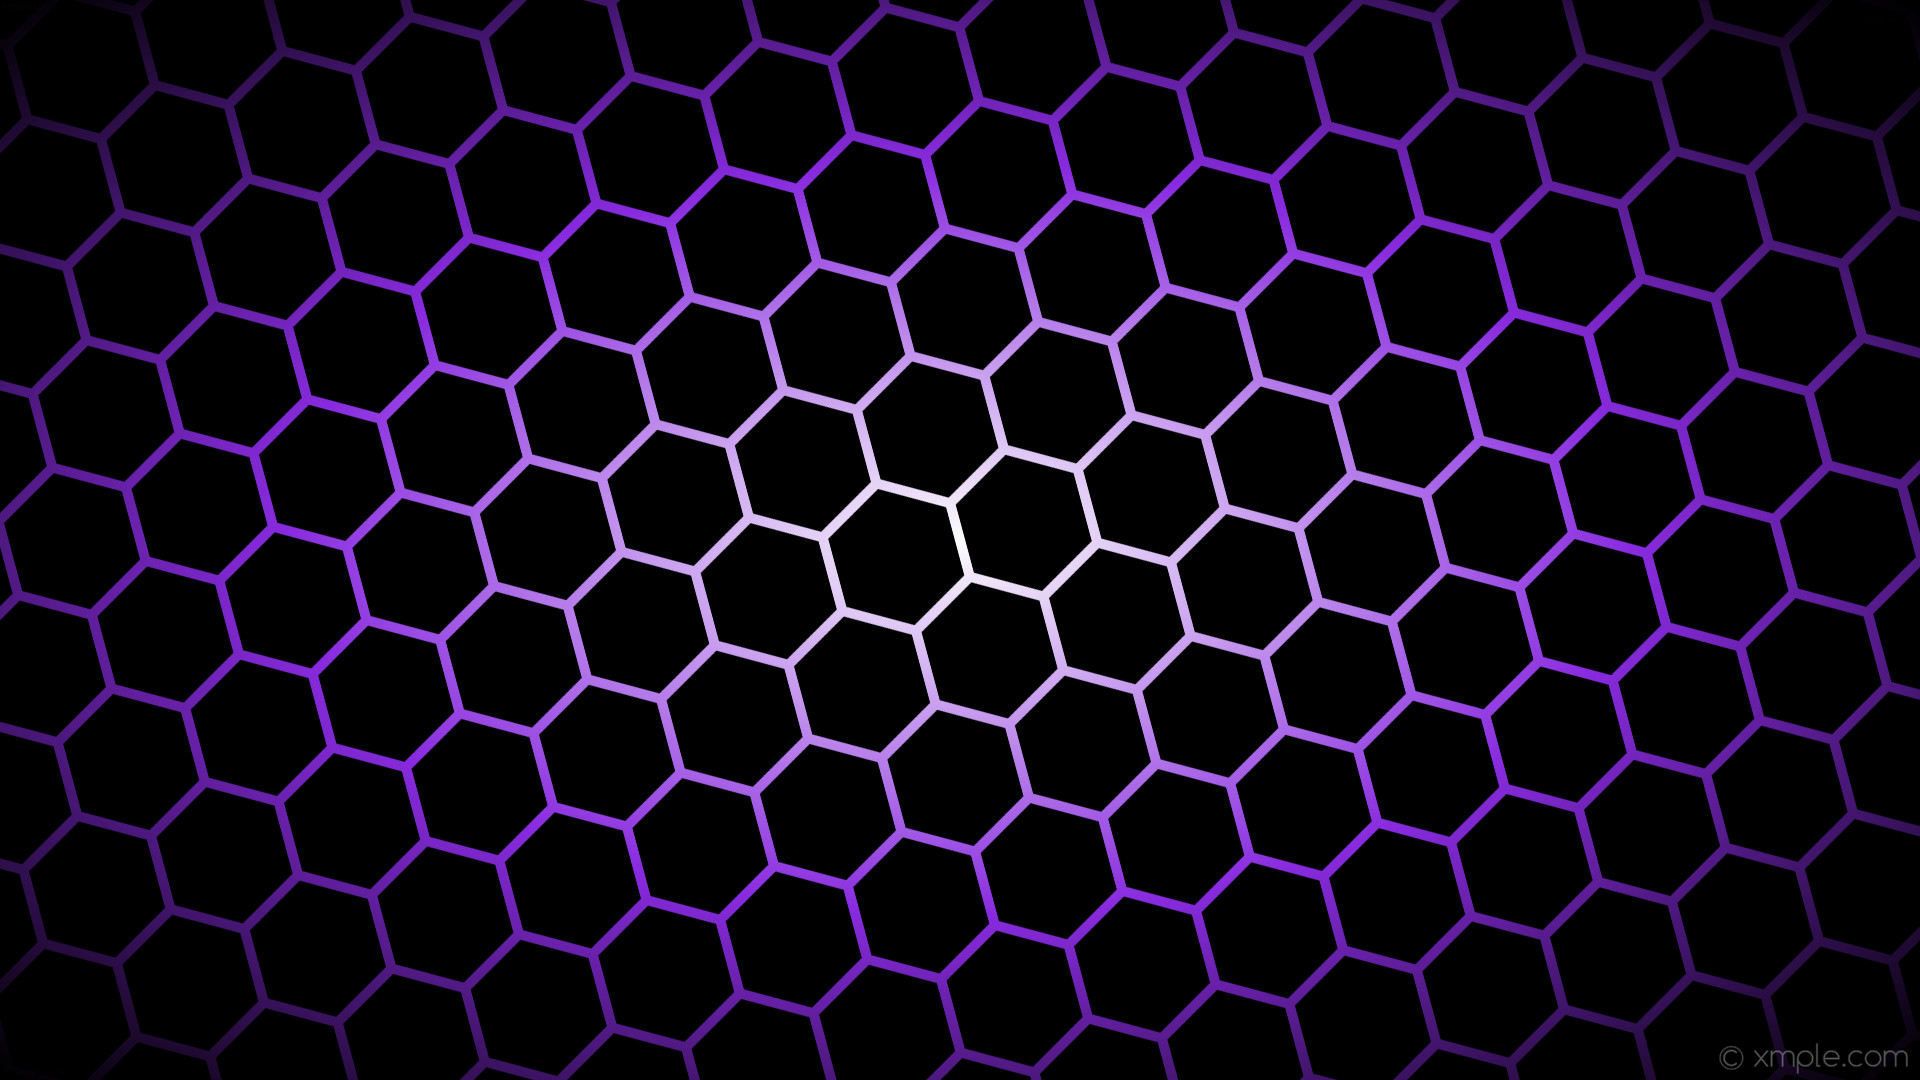 1920x1080 wallpaper black glow hexagon white purple gradient blue violet #000000  #ffffff #8a2be2 diagonal